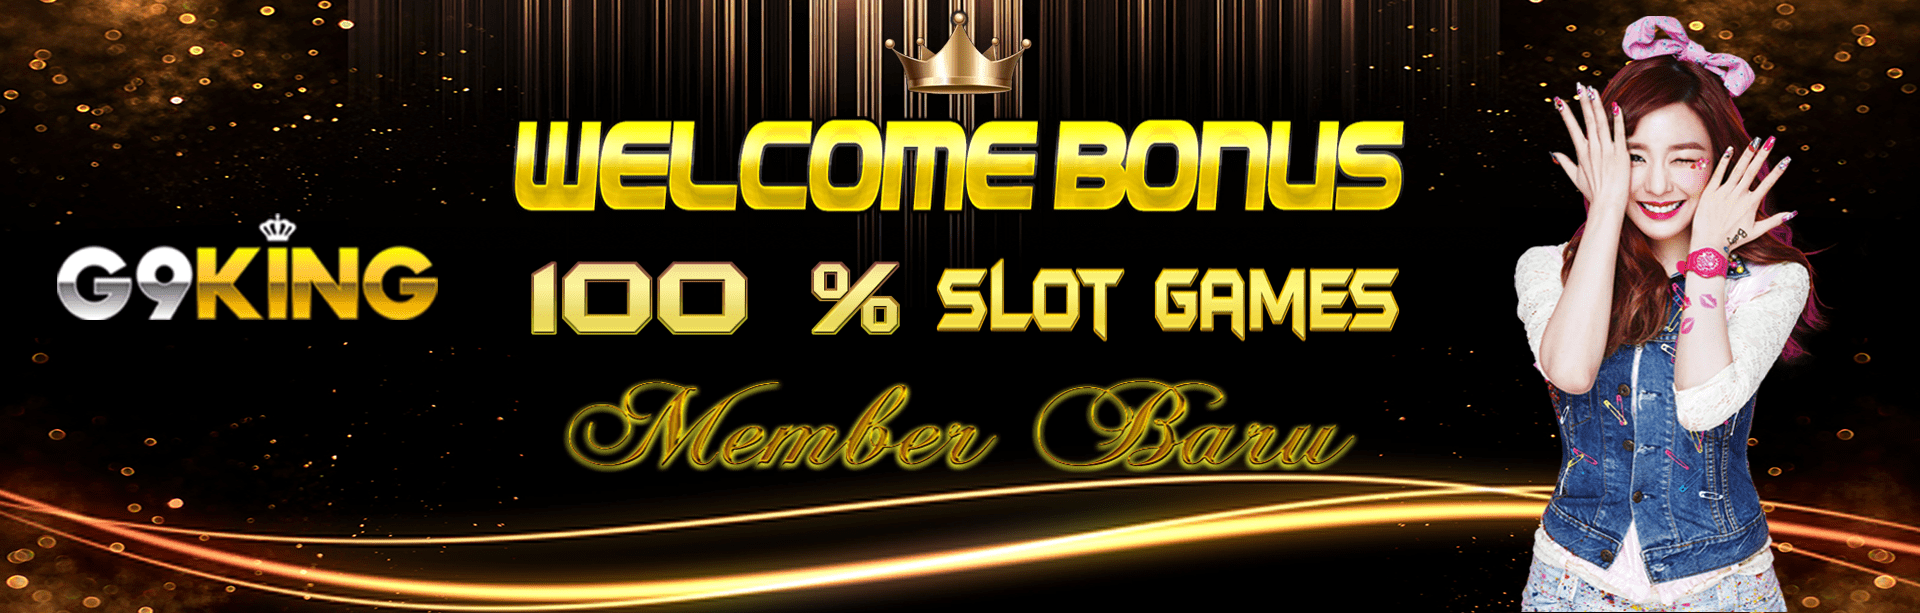  Welcome Bonus 100 %